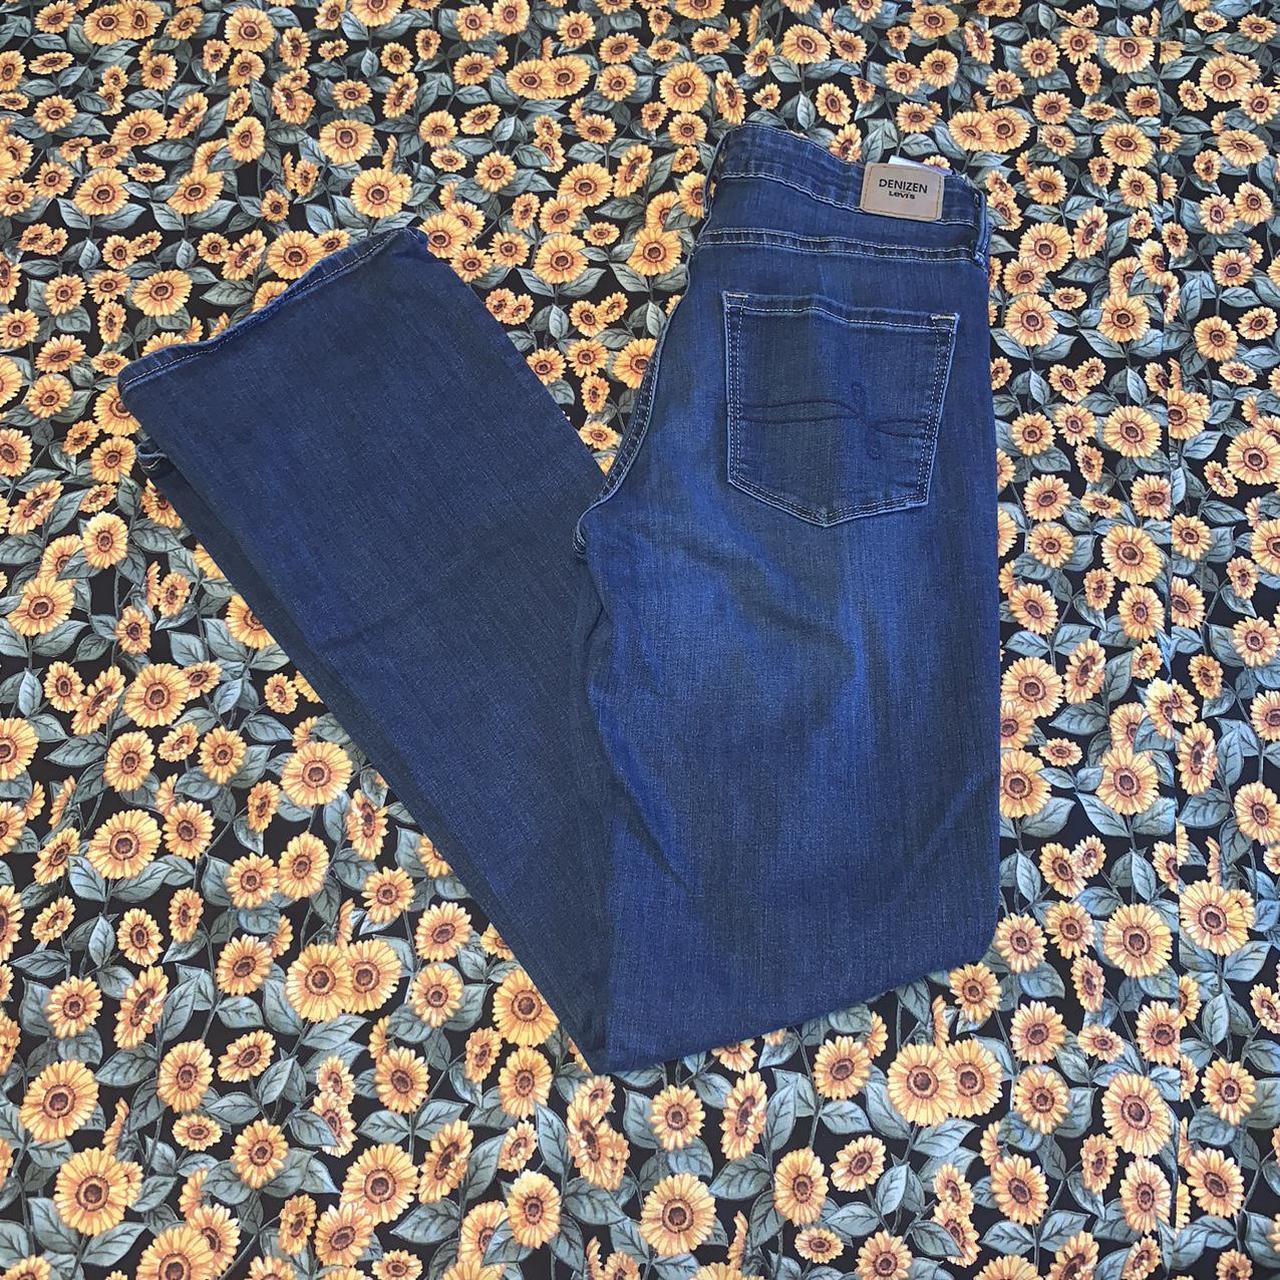 Levi's Women's Navy and Blue Jeans | Depop